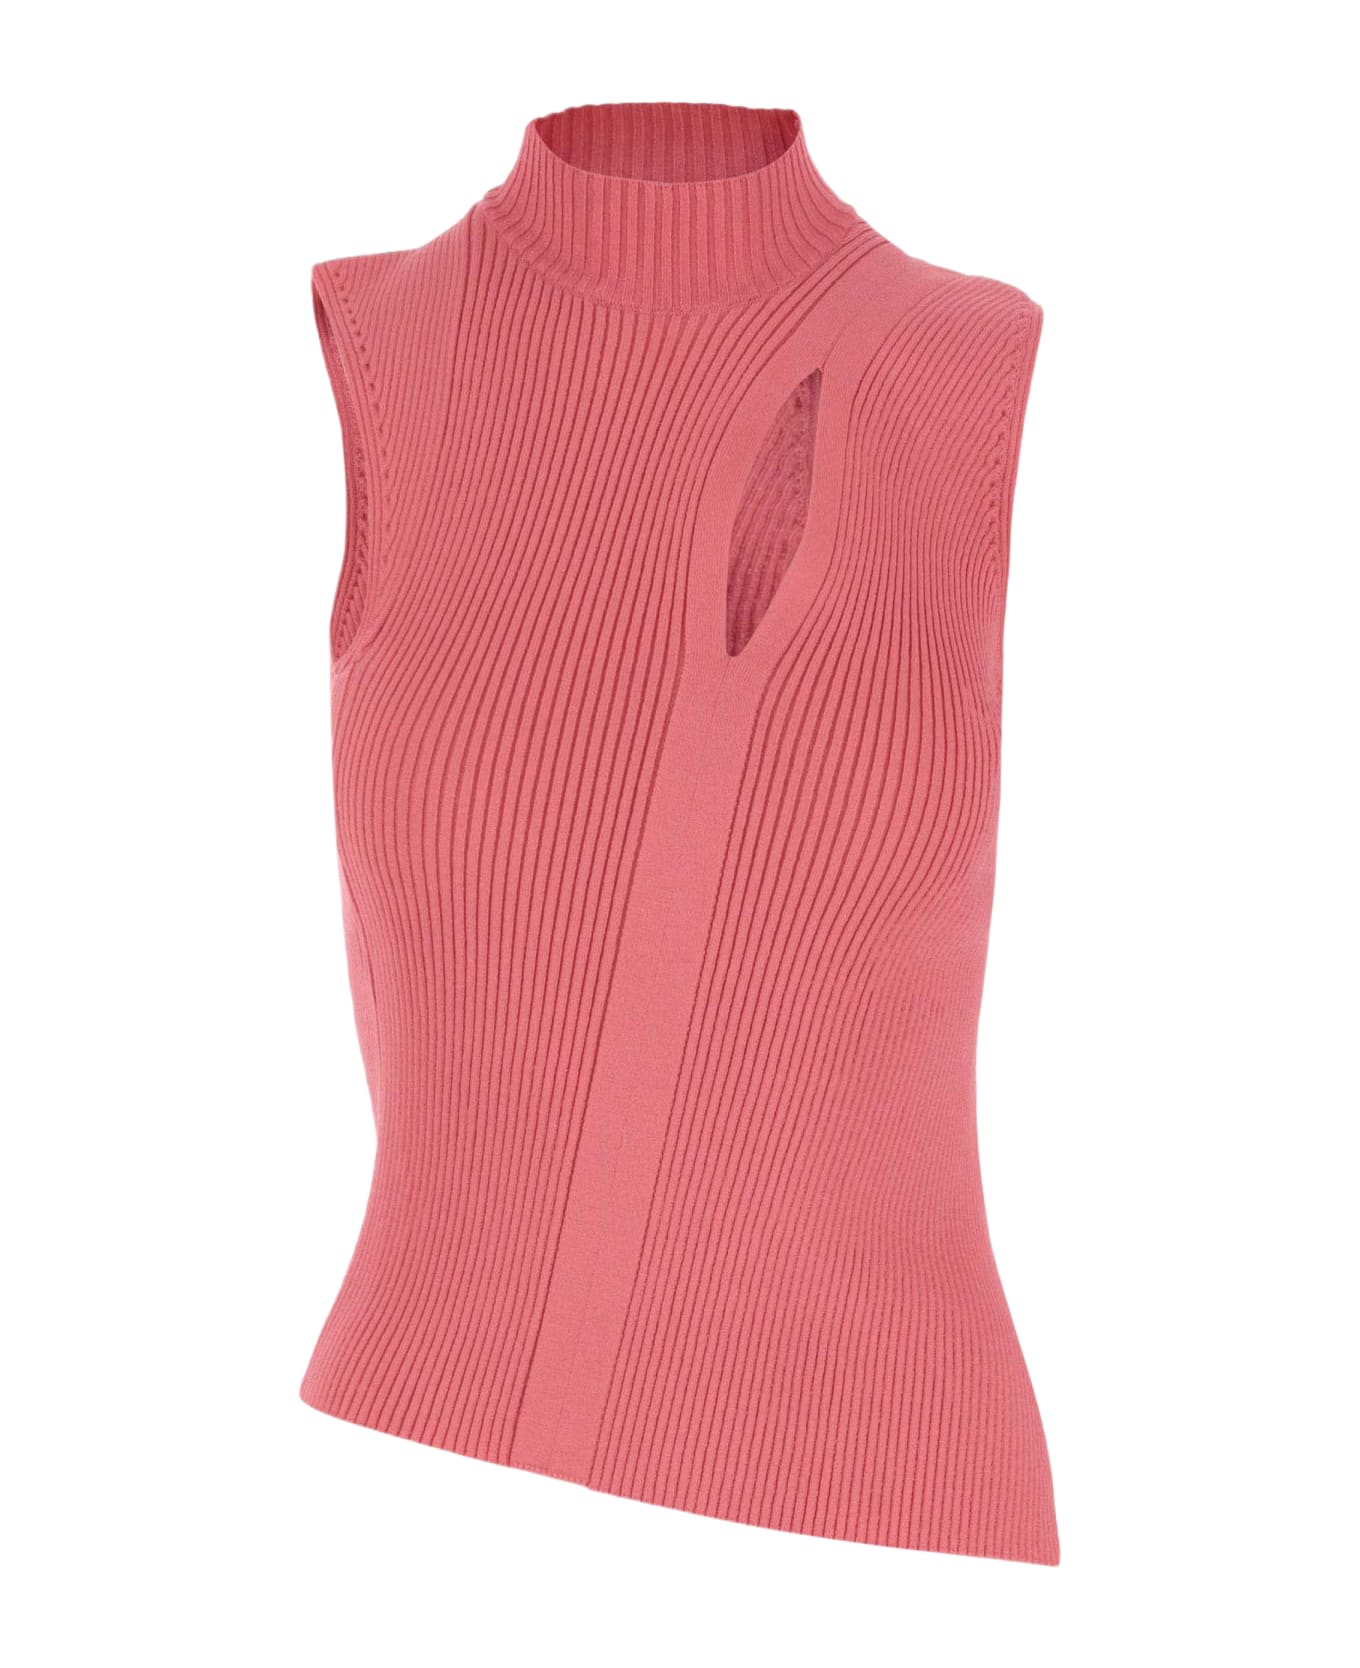 Versace Stretch Viscose Jersey Top - Pink